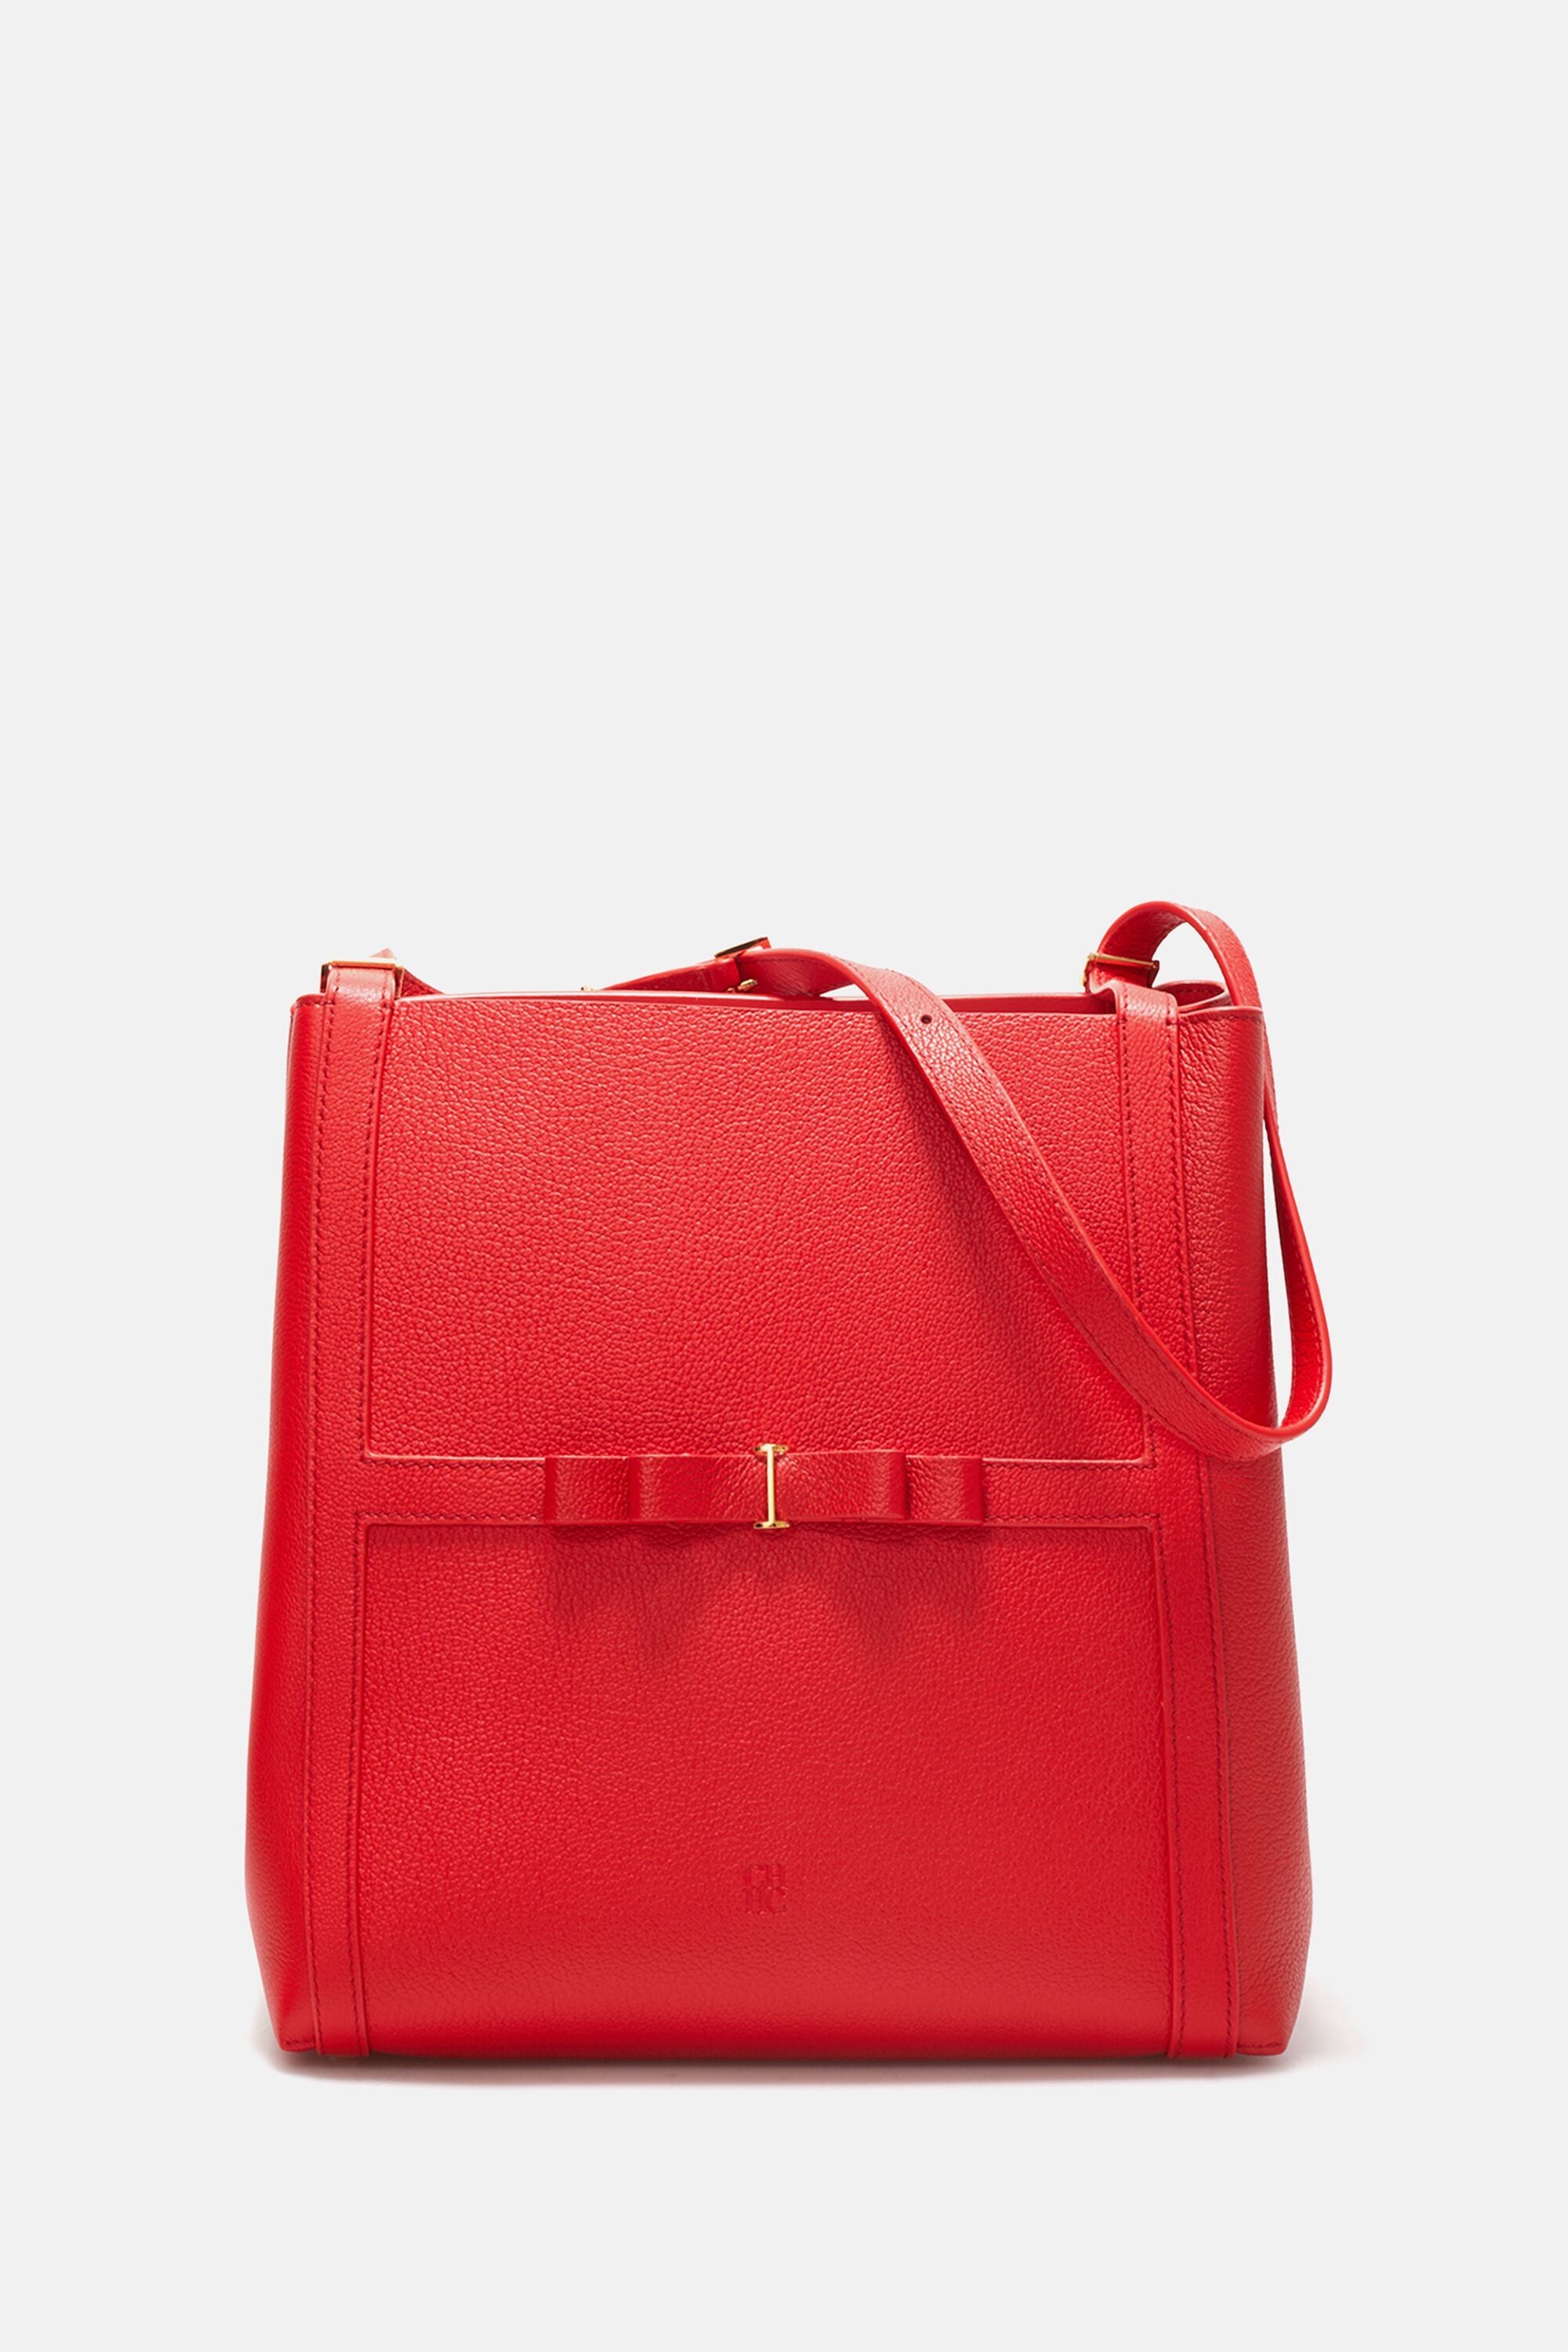 Buy Lavie Women's Aalto Large Tote Bag D Red Ladies Purse Handbag at  Amazon.in